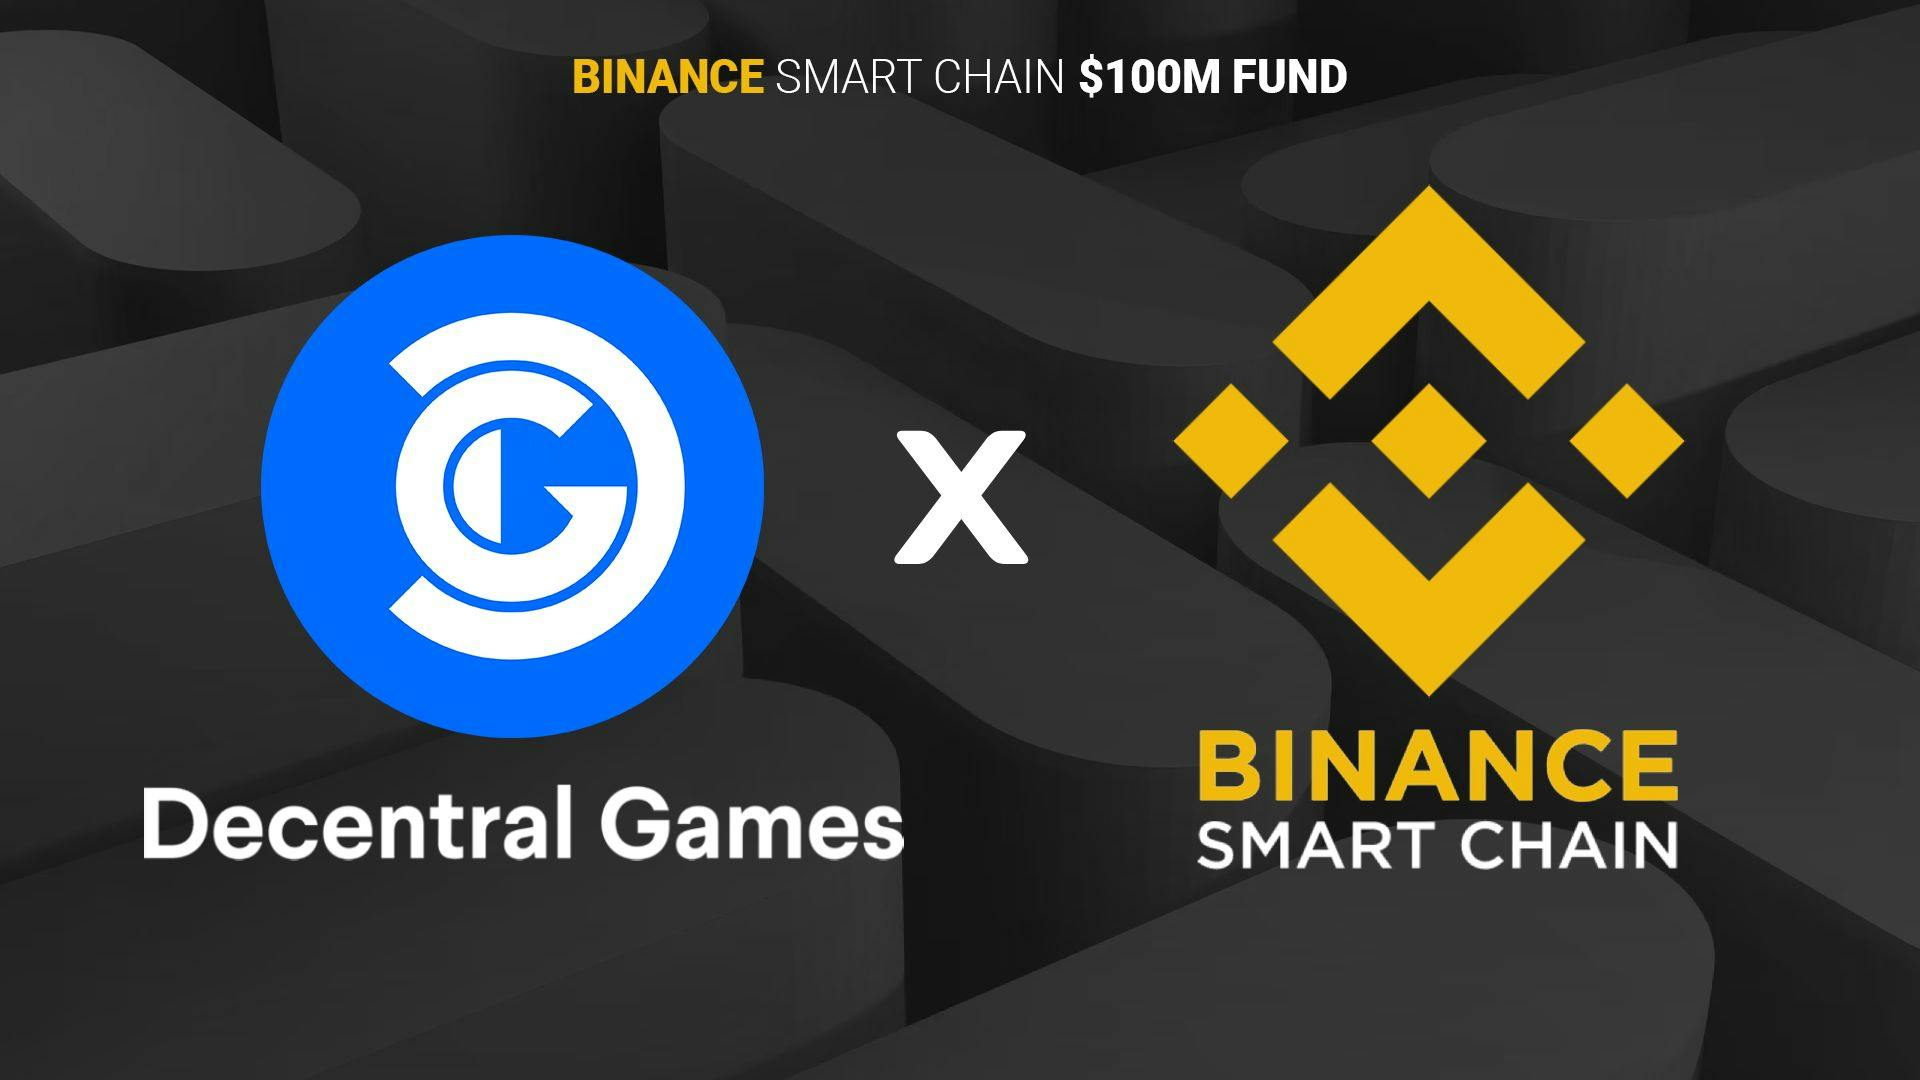 featured image - Binance Smart Chain Funds Decentral Games Via its $100 million Accelerator Program 